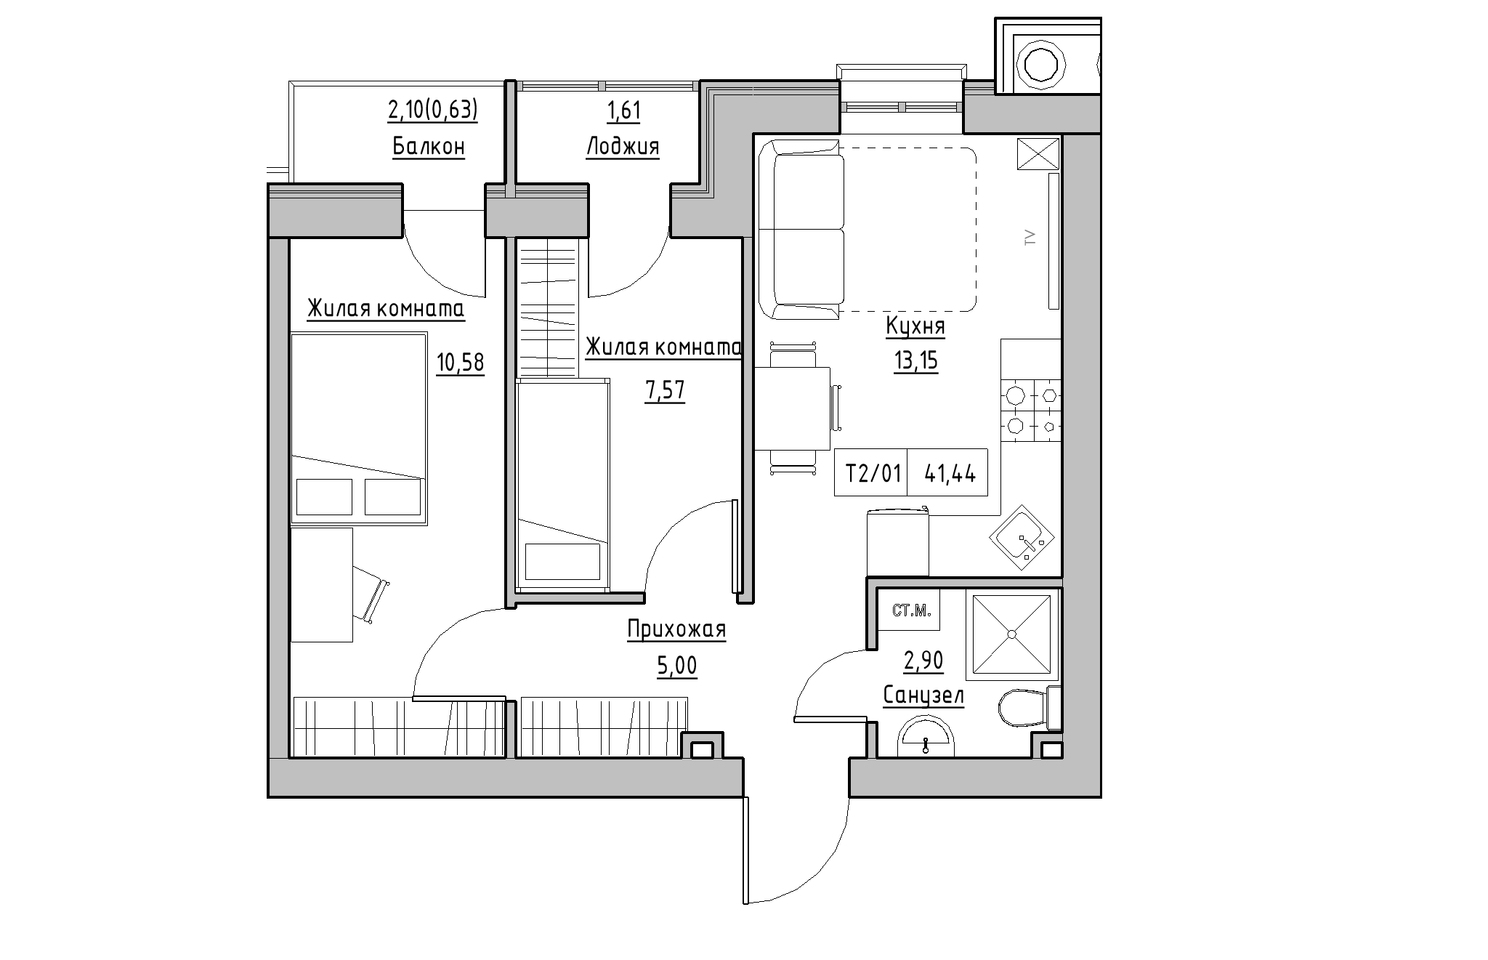 Planning 2-rm flats area 41.44m2, KS-010-02/0005.